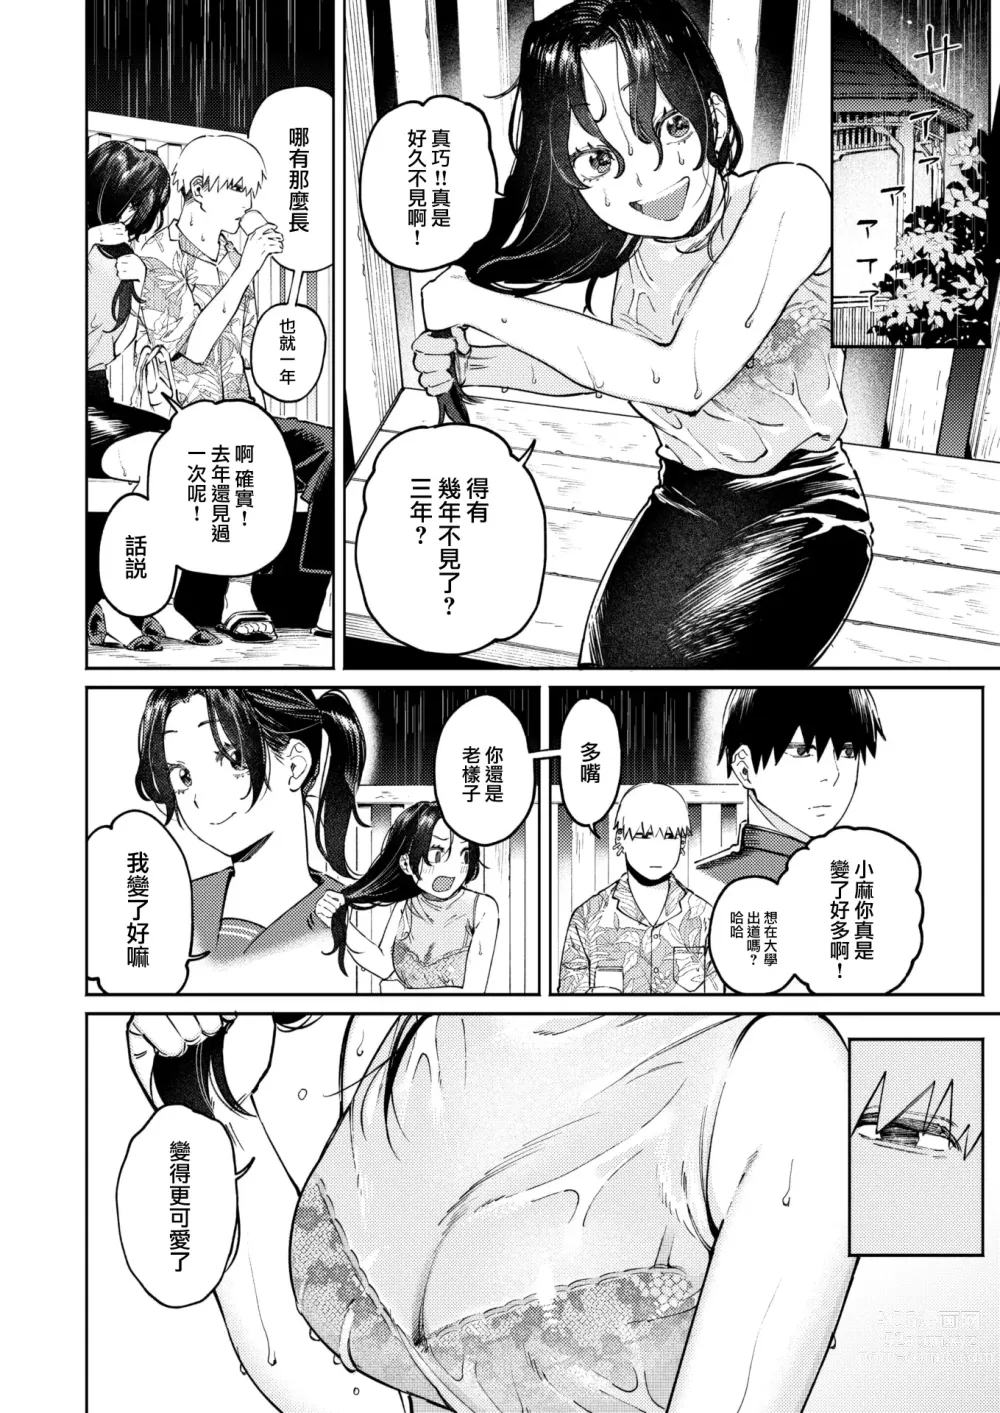 Page 5 of manga Gazebo nite - Under a Gazebo